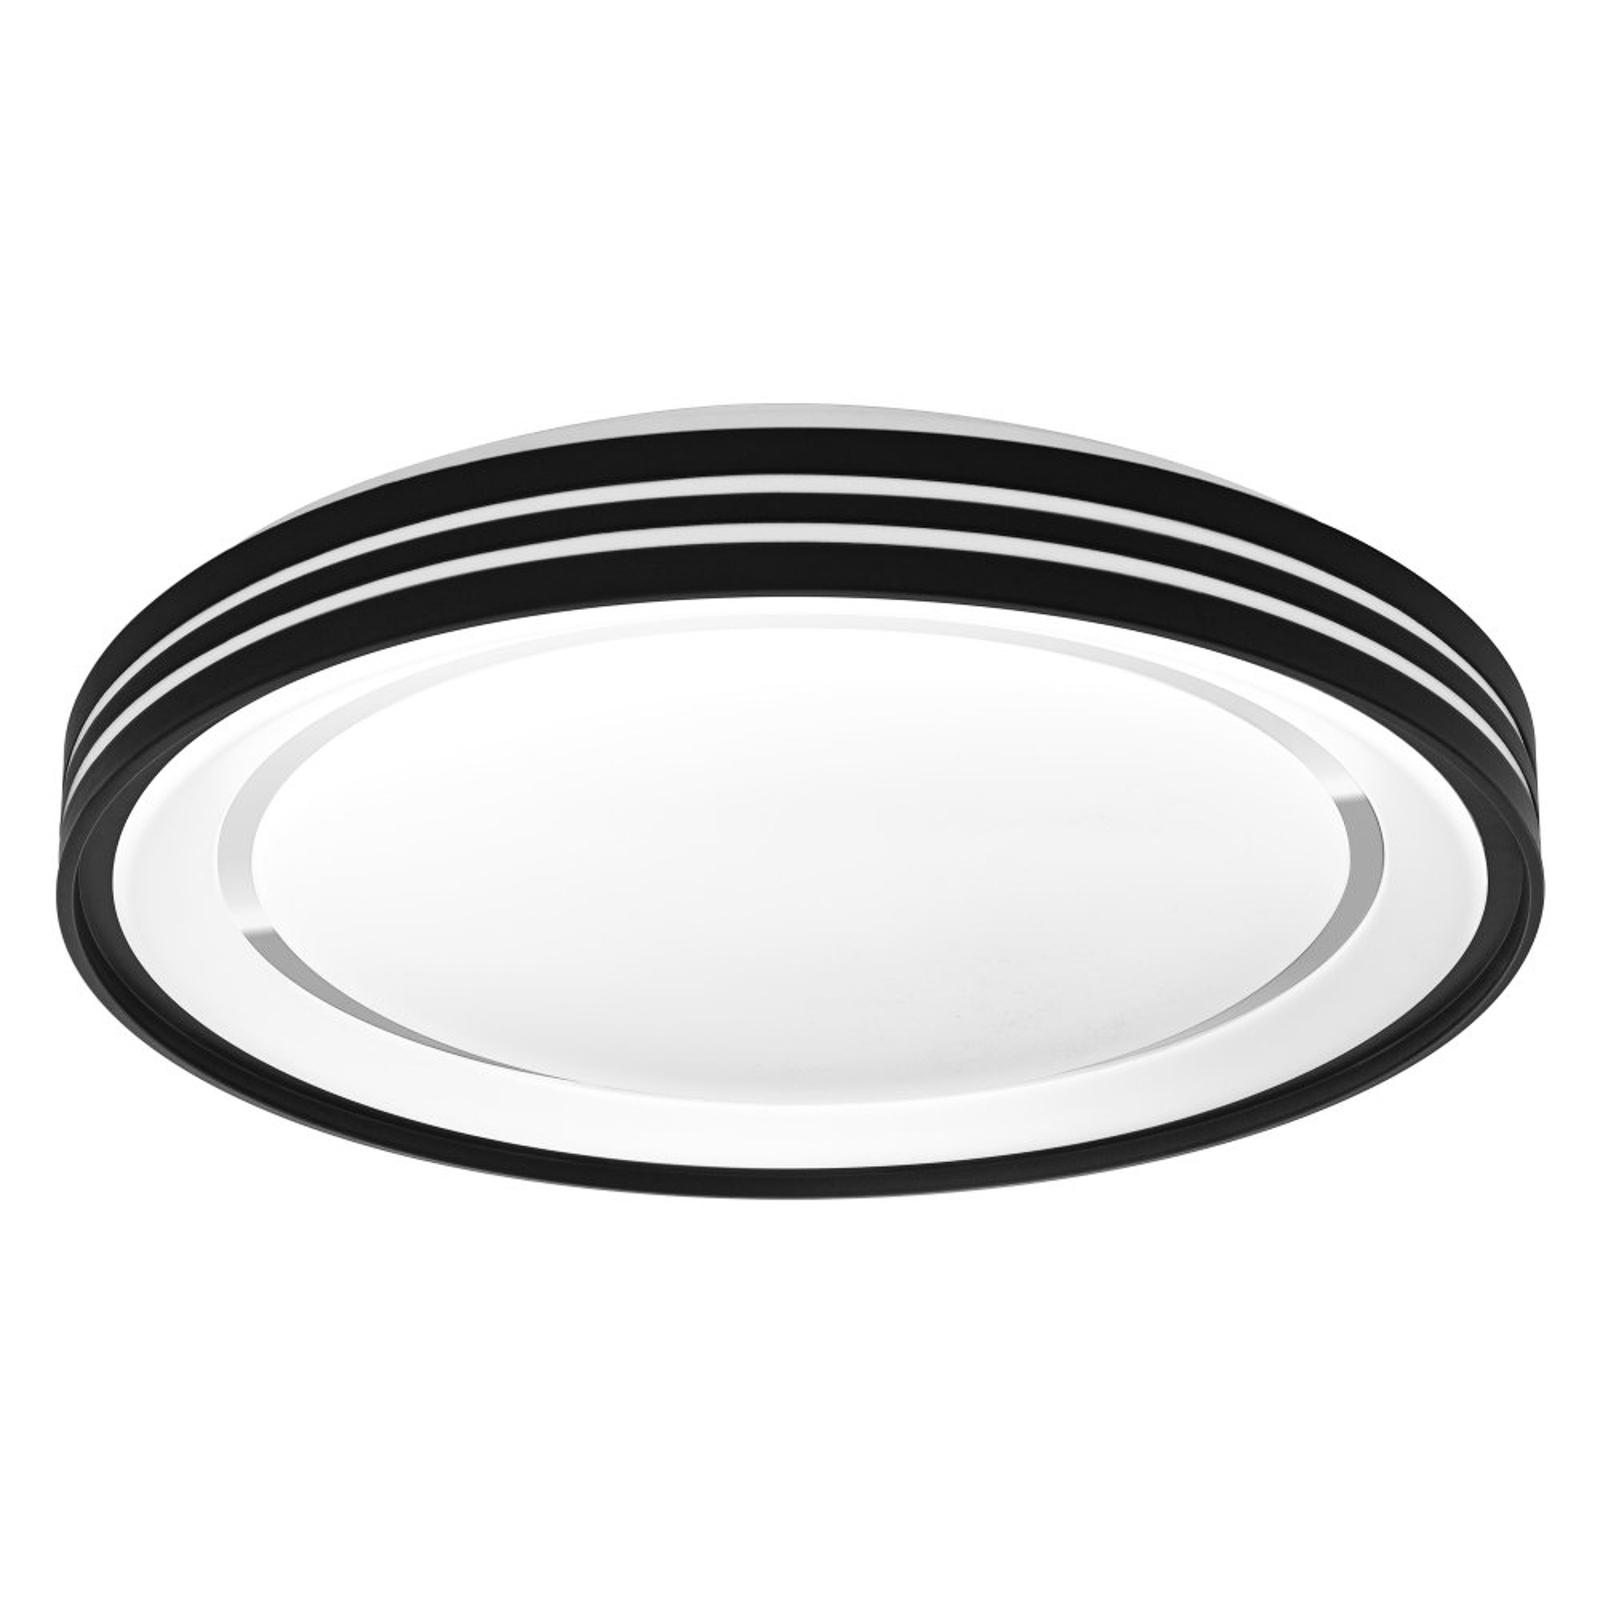 LEDVANCE SMART+WiFi Orbis Jarden strop svetlo 50cm